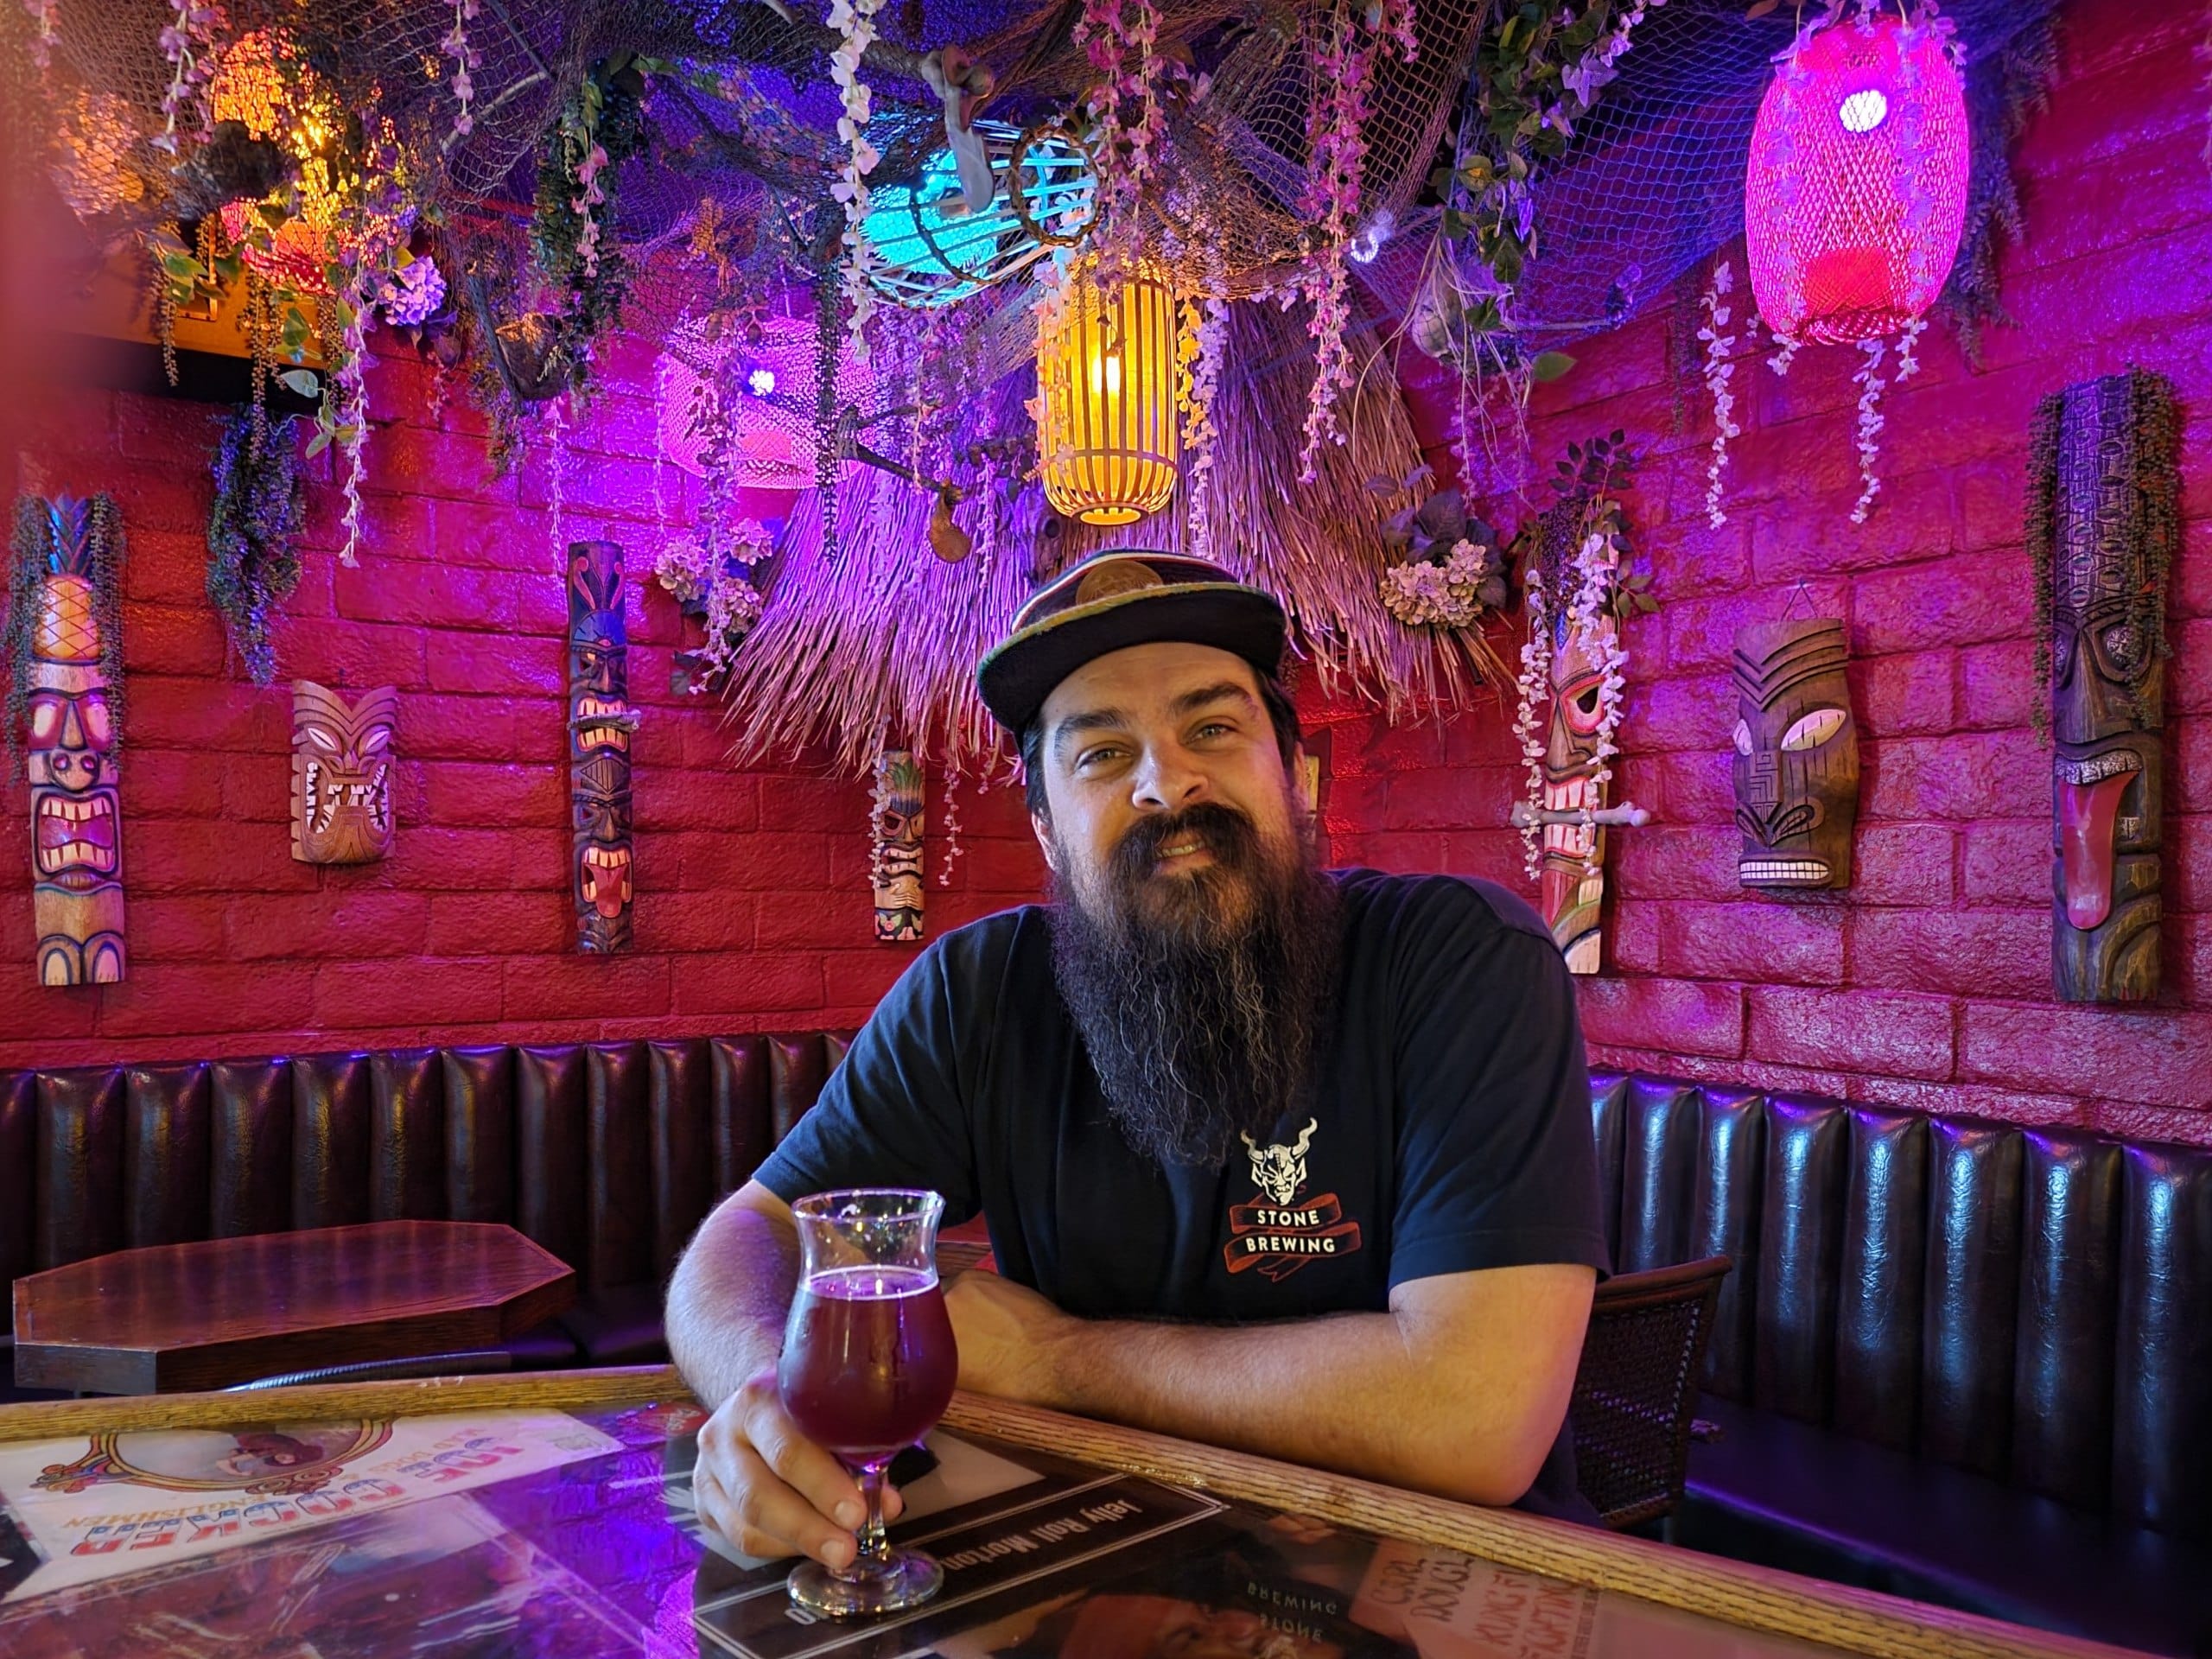 Red Dwarf bar owner, Russell Gardner 